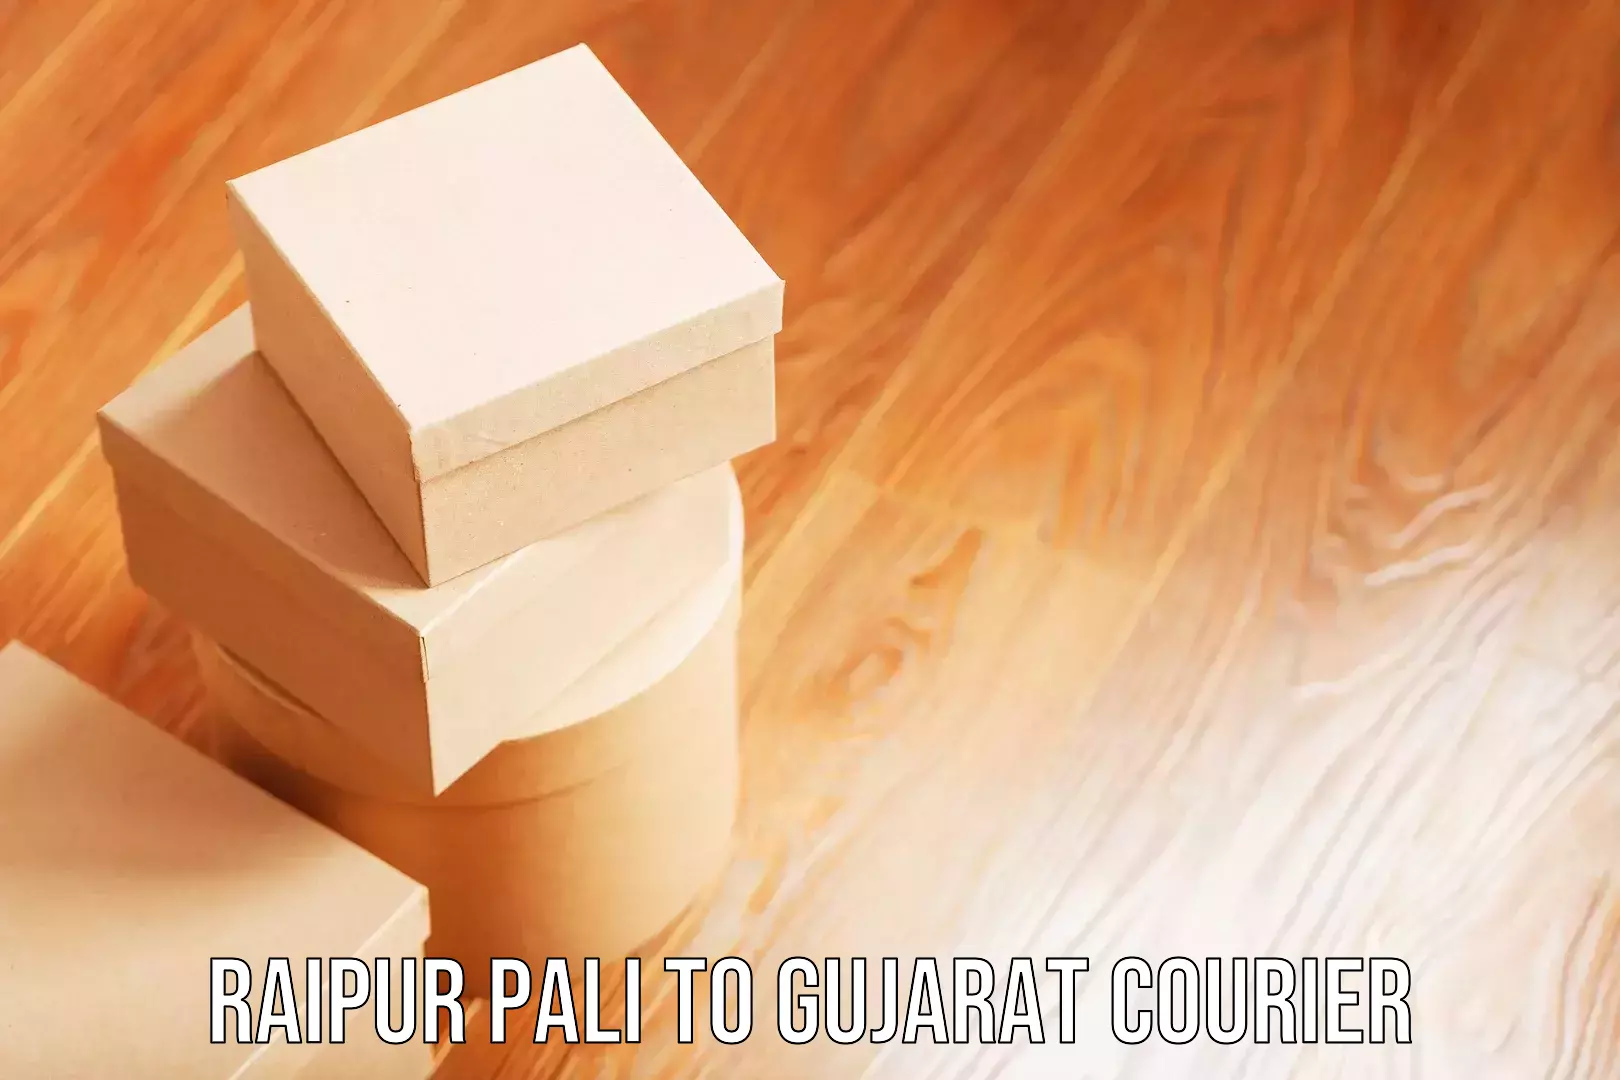 Luggage shipment tracking Raipur Pali to Gujarat